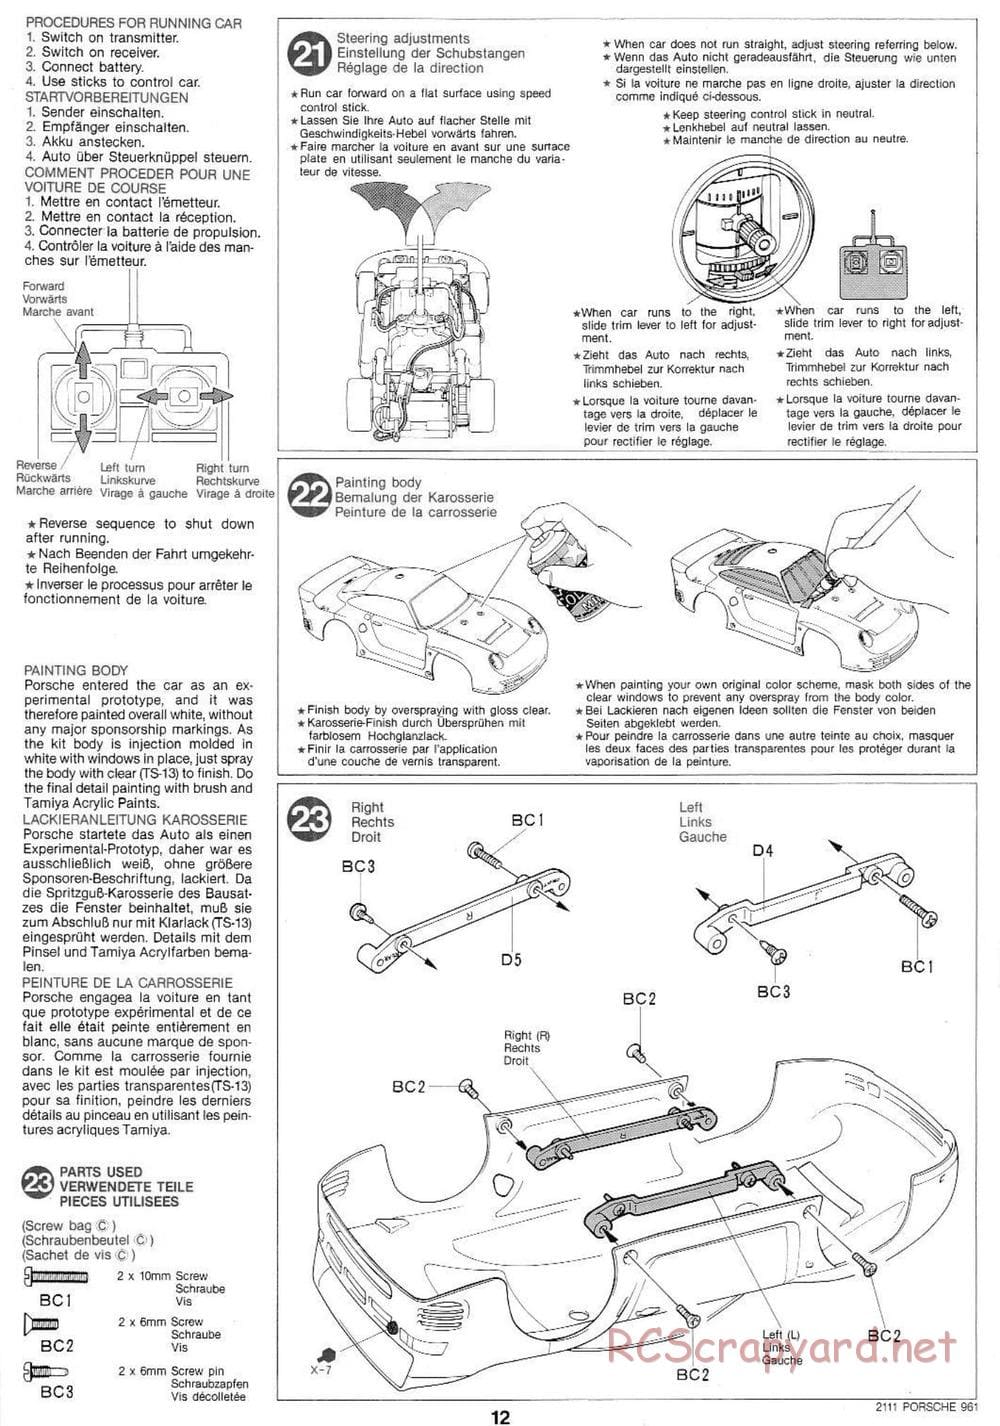 Tamiya - Tamtech - Porsche 961 Chassis - Manual - Page 12